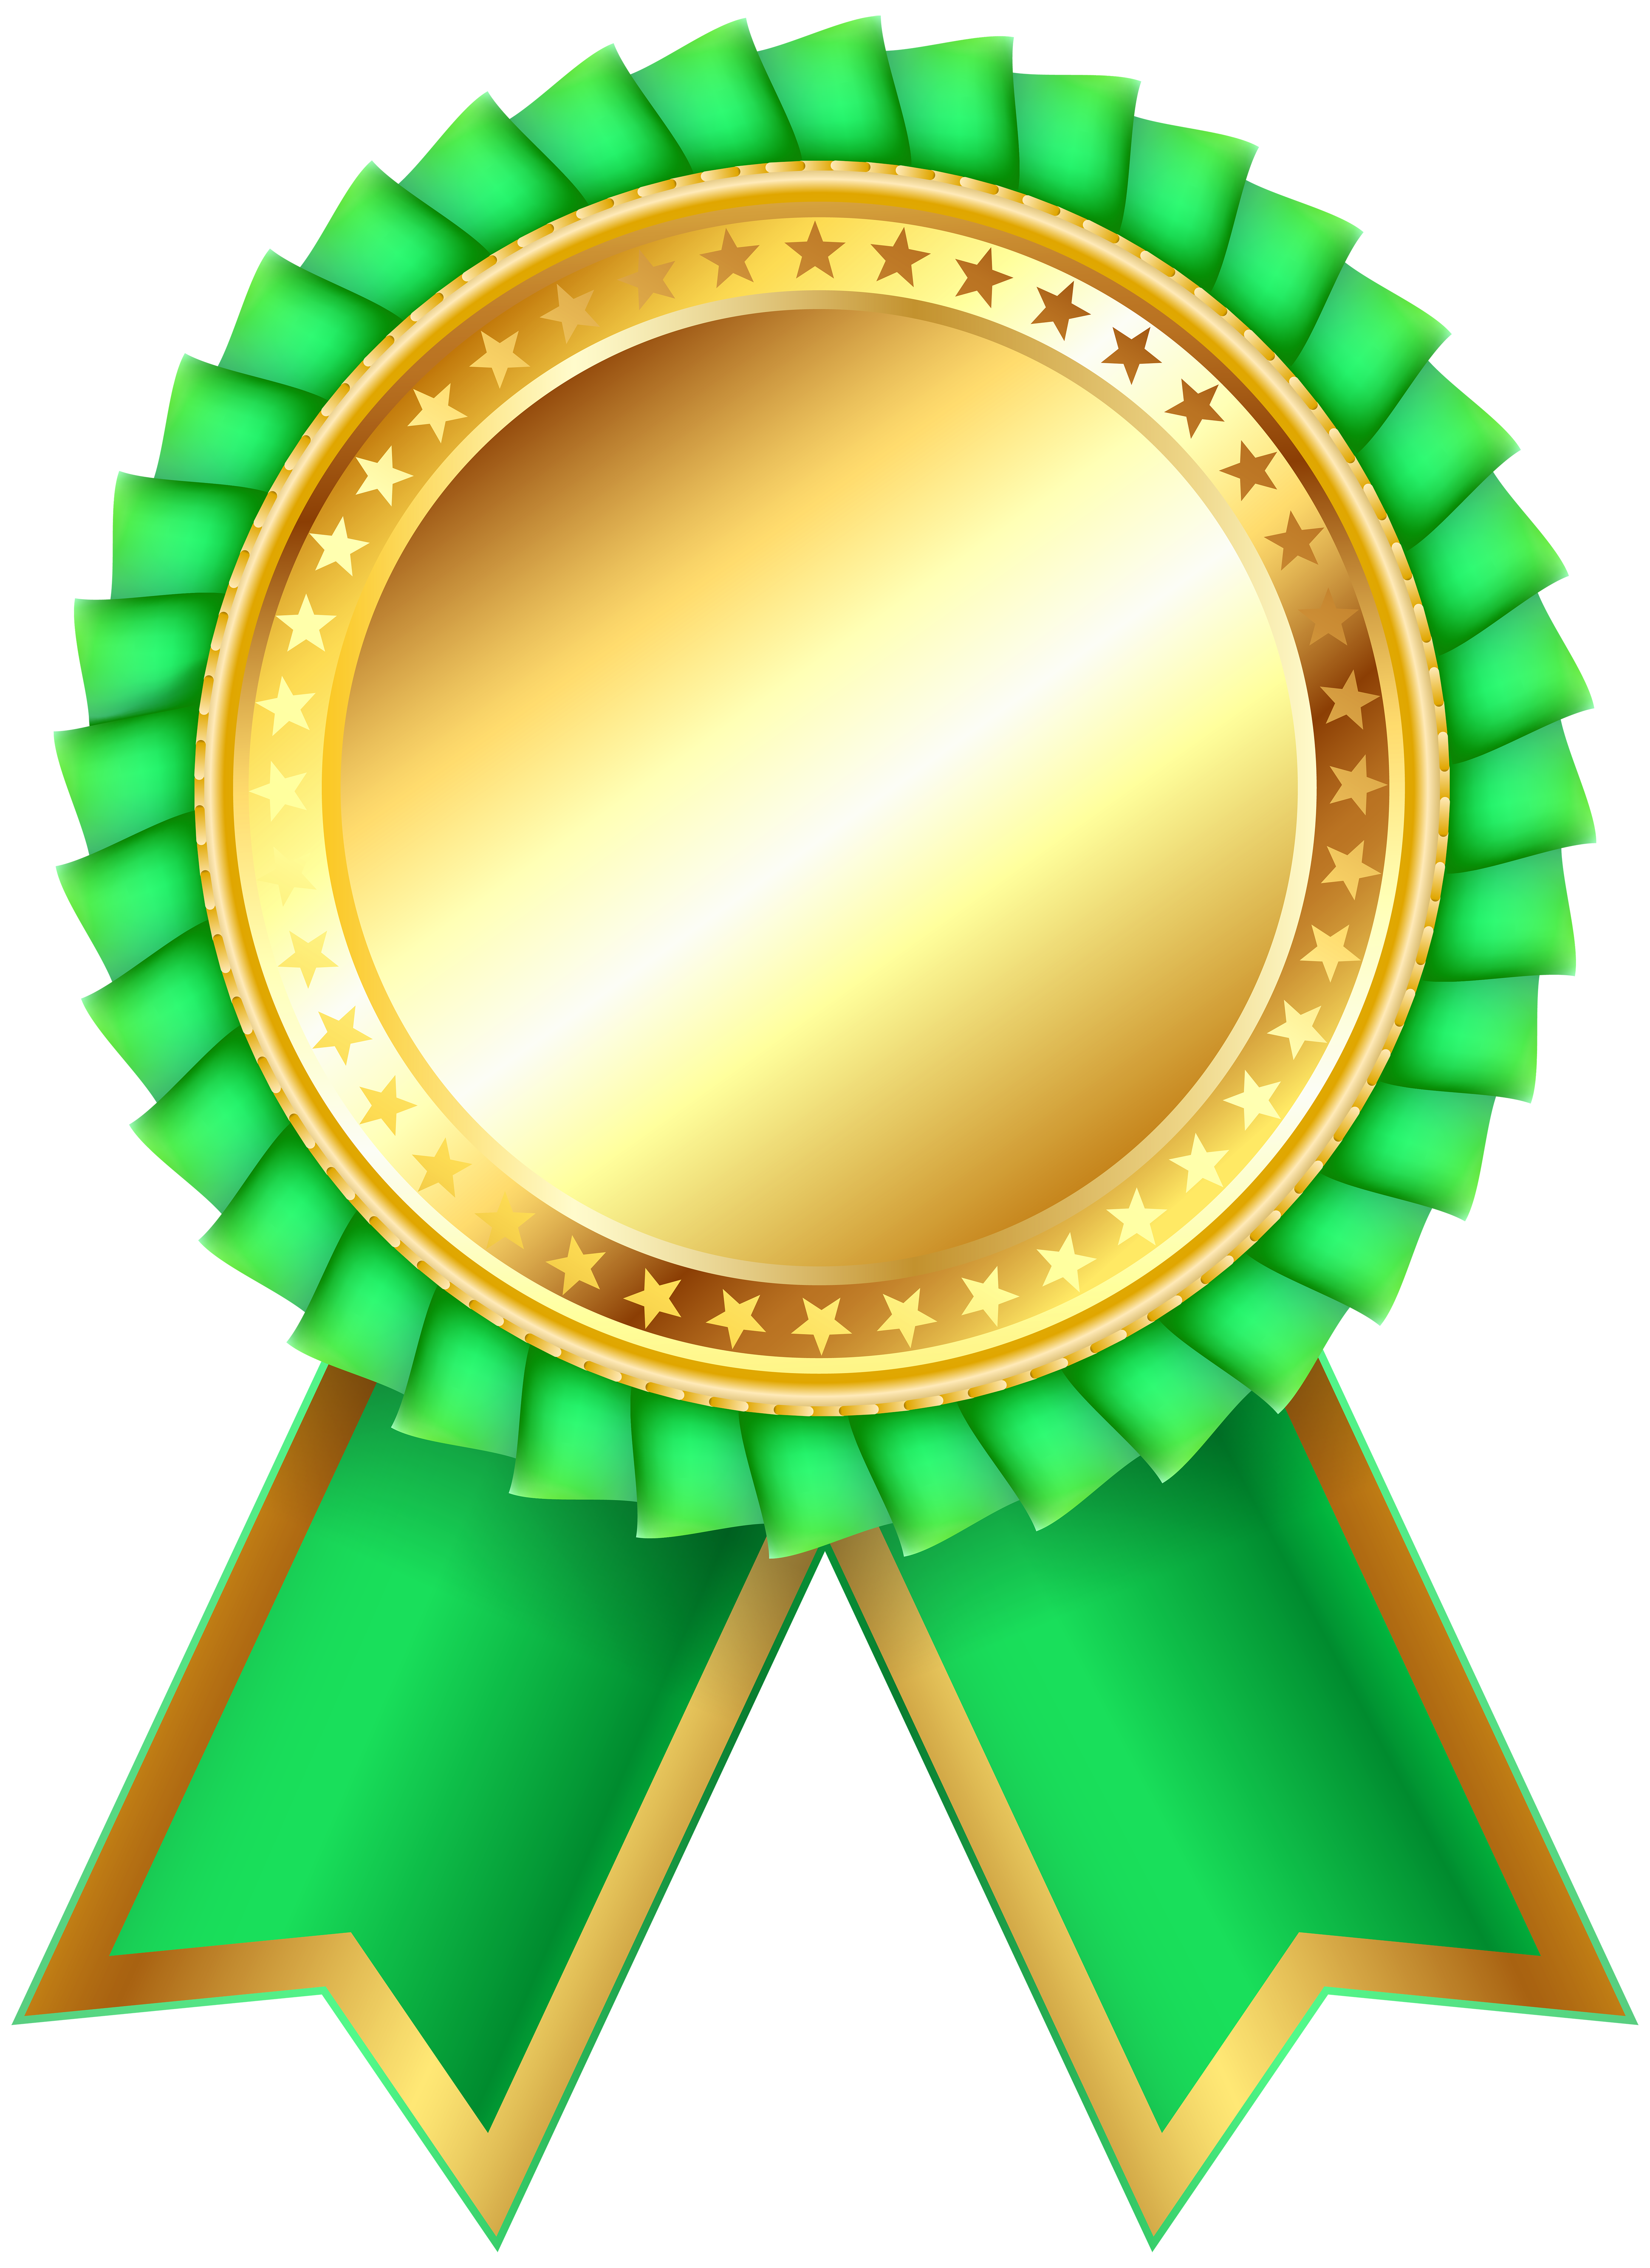 Green Award Rosette PNG Clipar Image